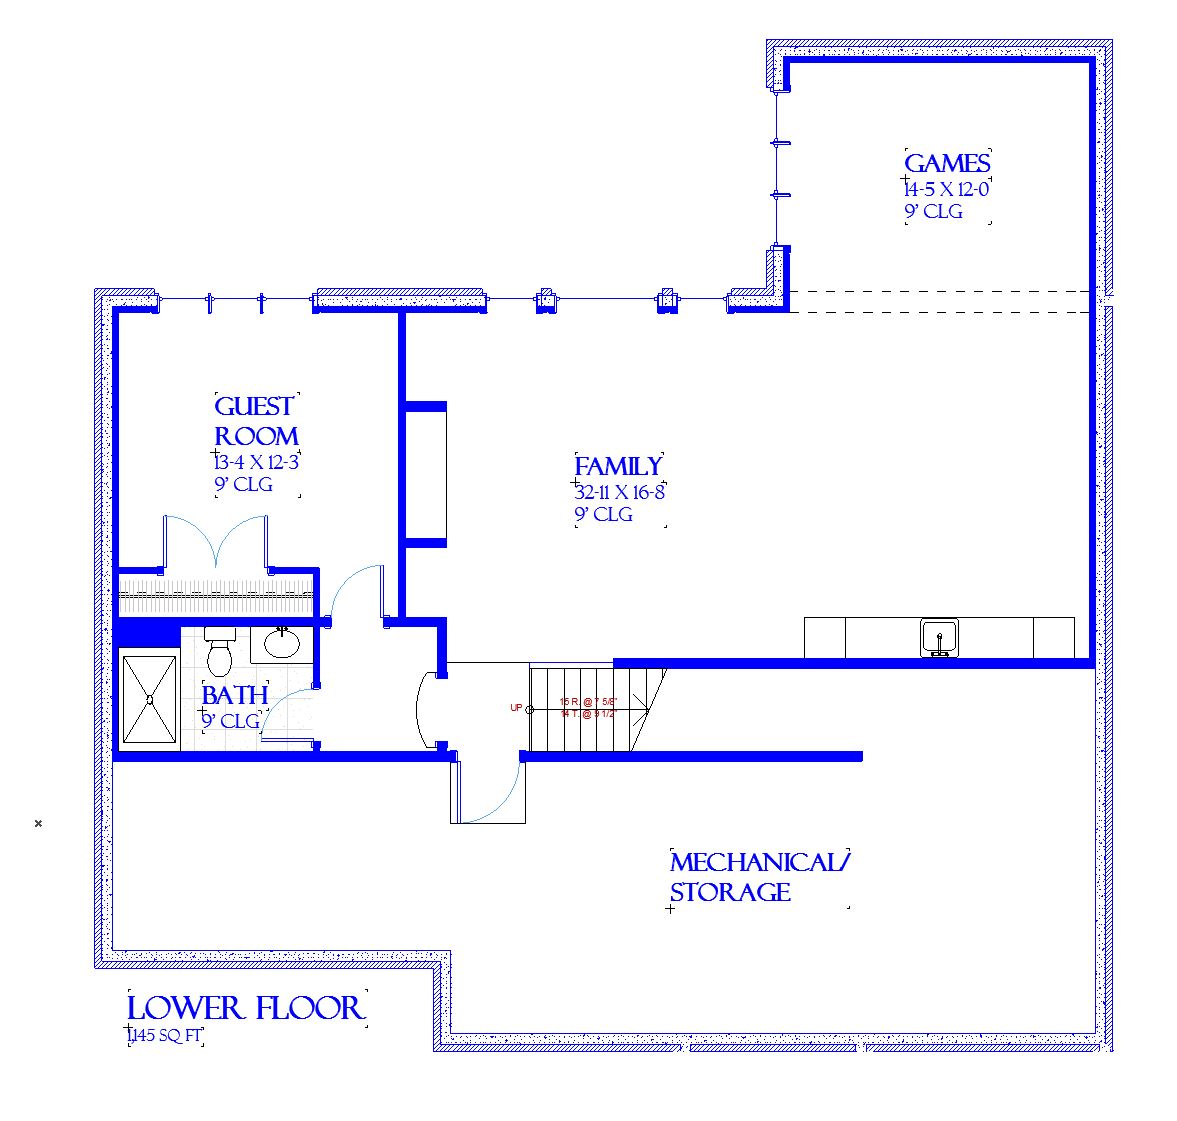 Hampton - Home Design and Floor Plan - SketchPad House Plans